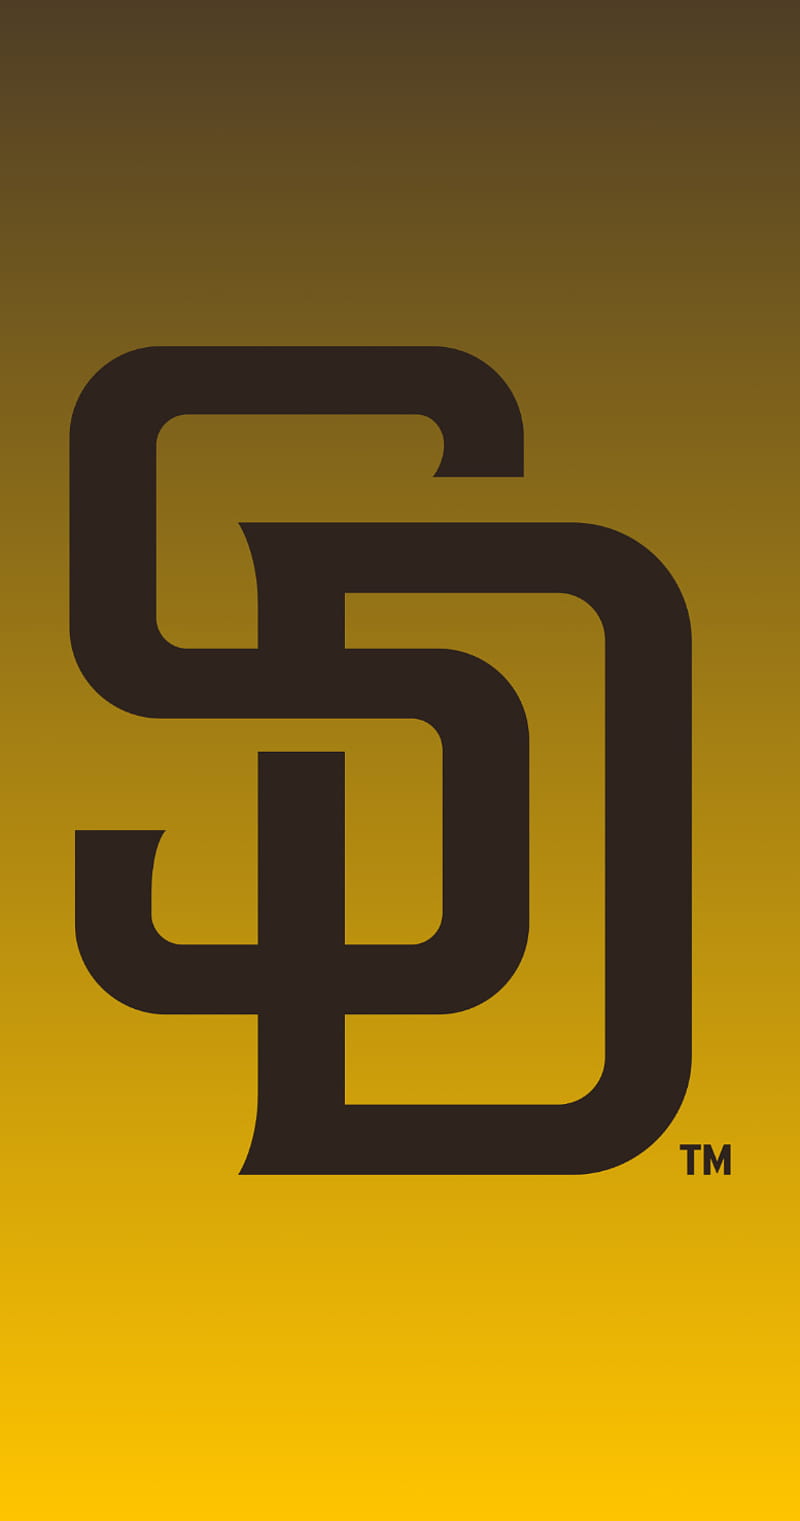 San Diego Padres Wallpapers - Top Free San Diego Padres